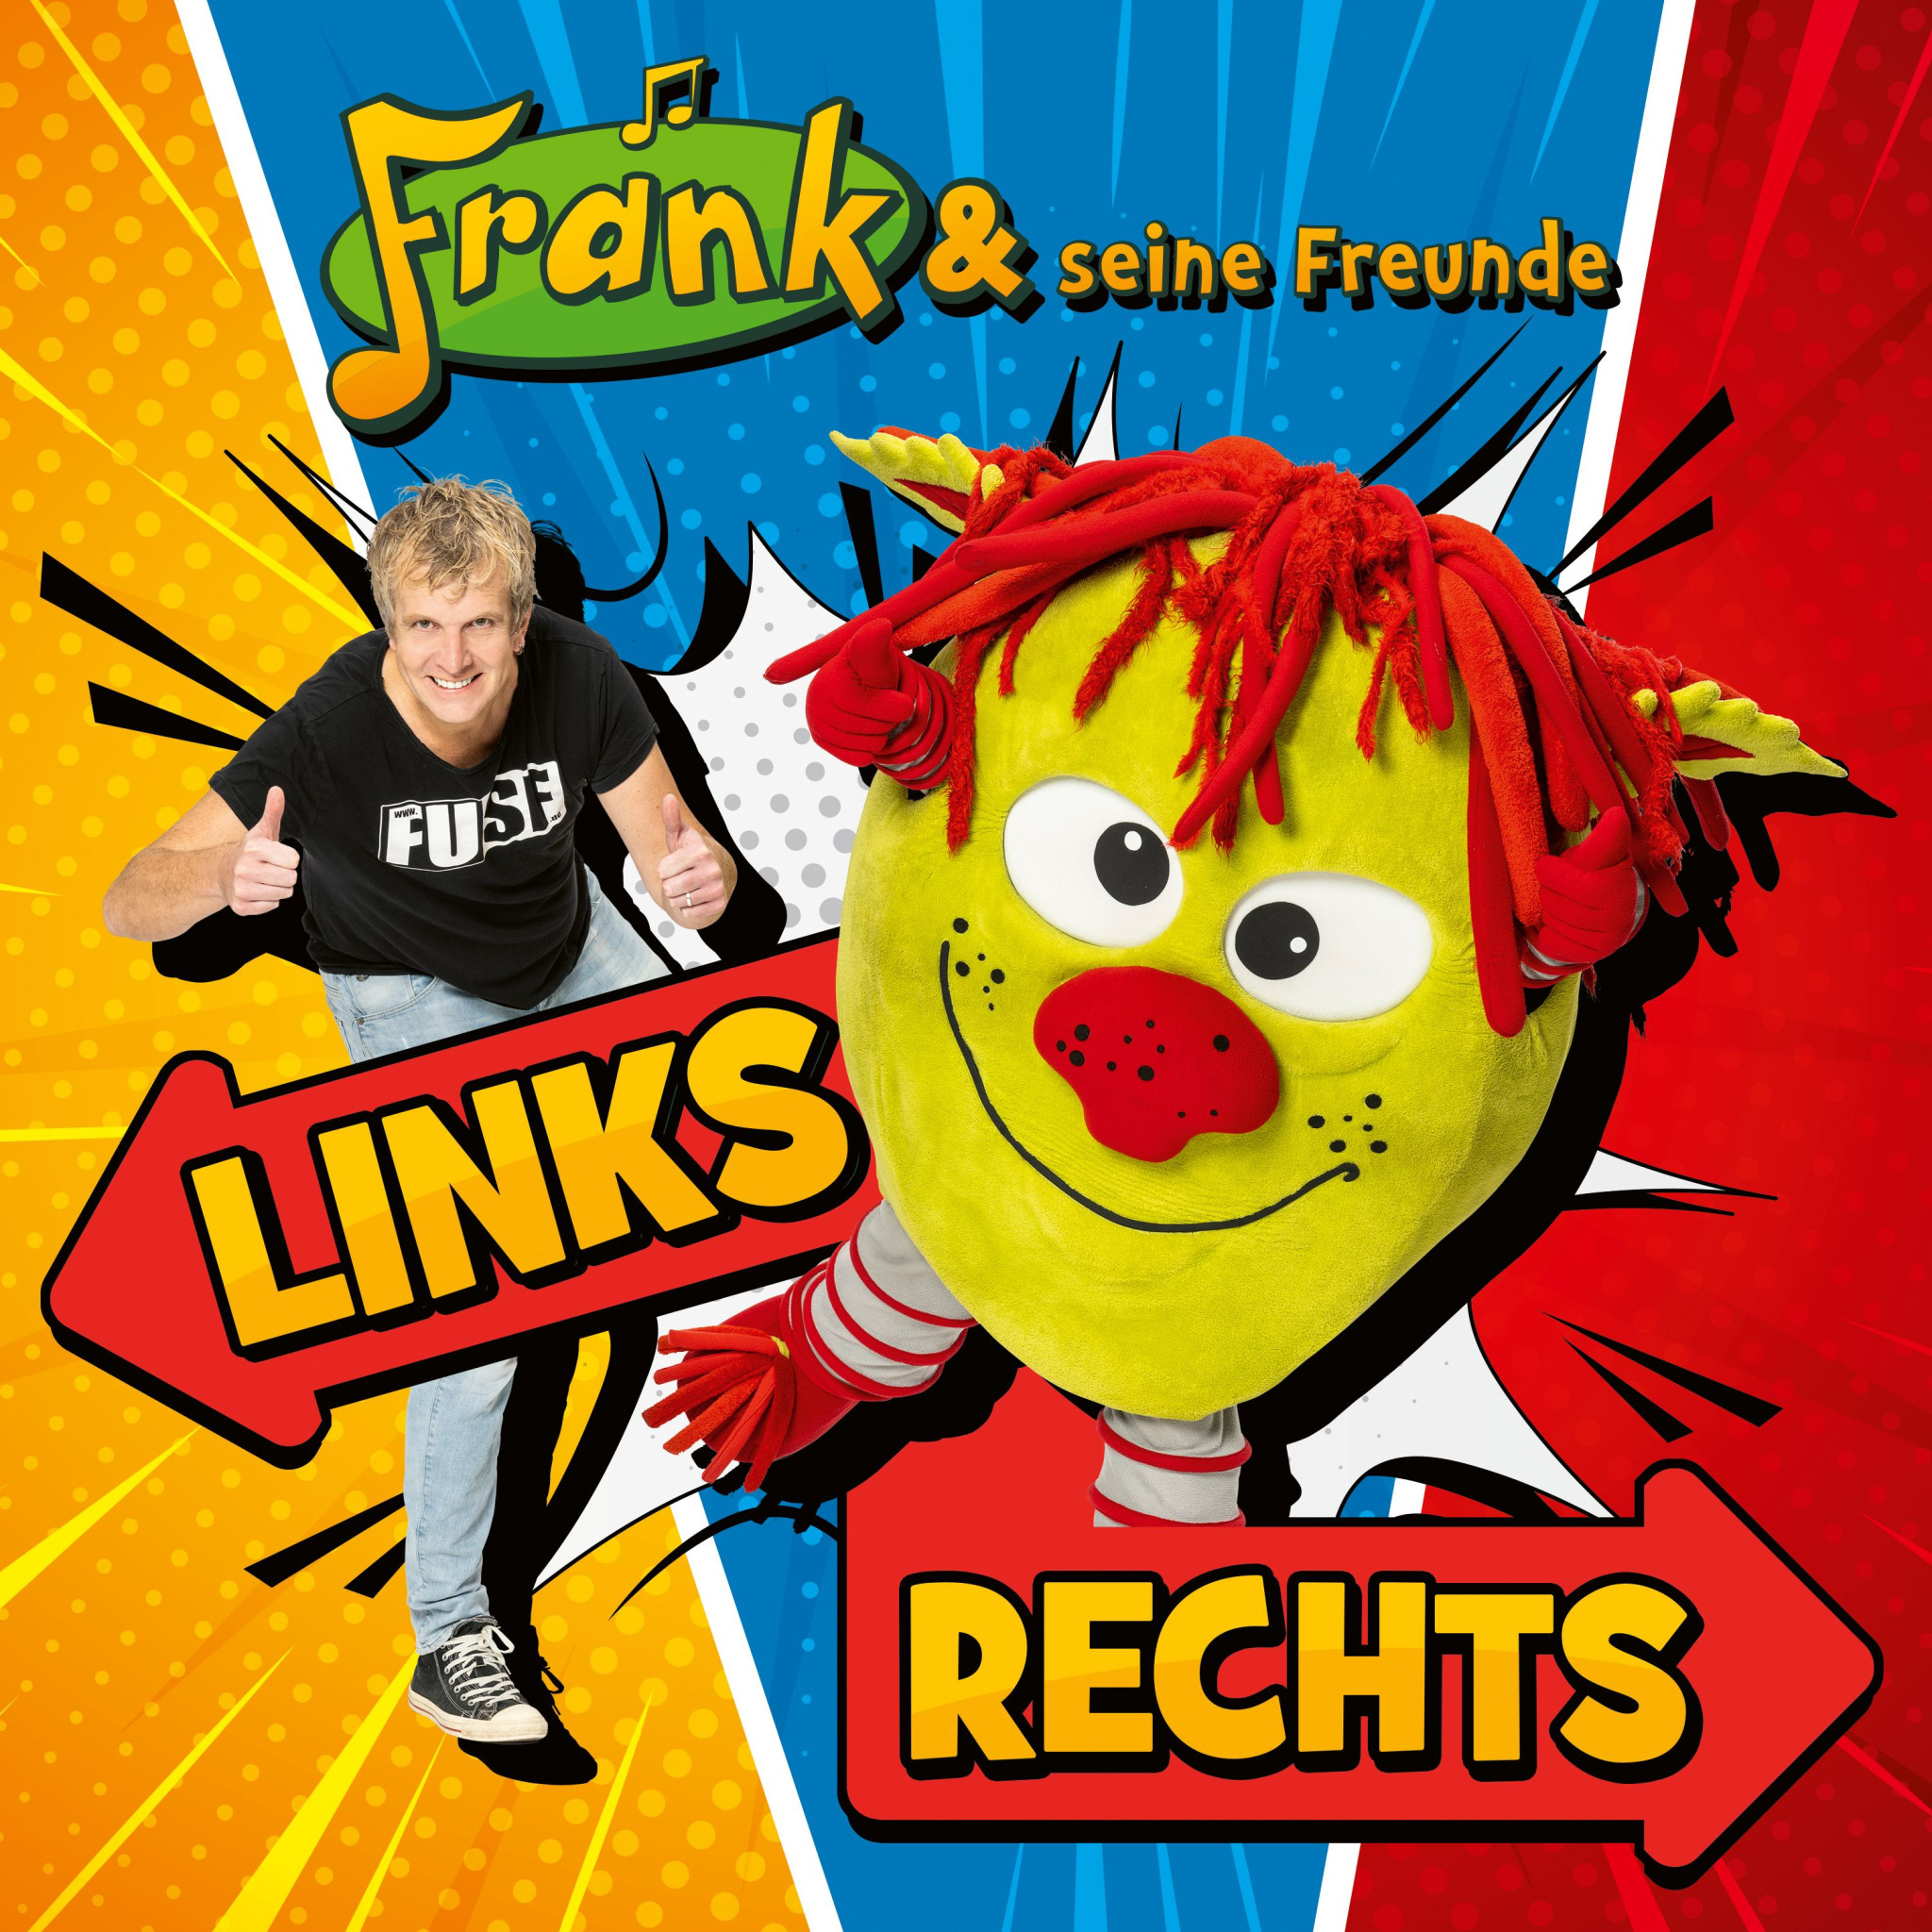 Frank und seine Freunde Links Rechts Single eCover_3k_sRGB_LZW.jpg